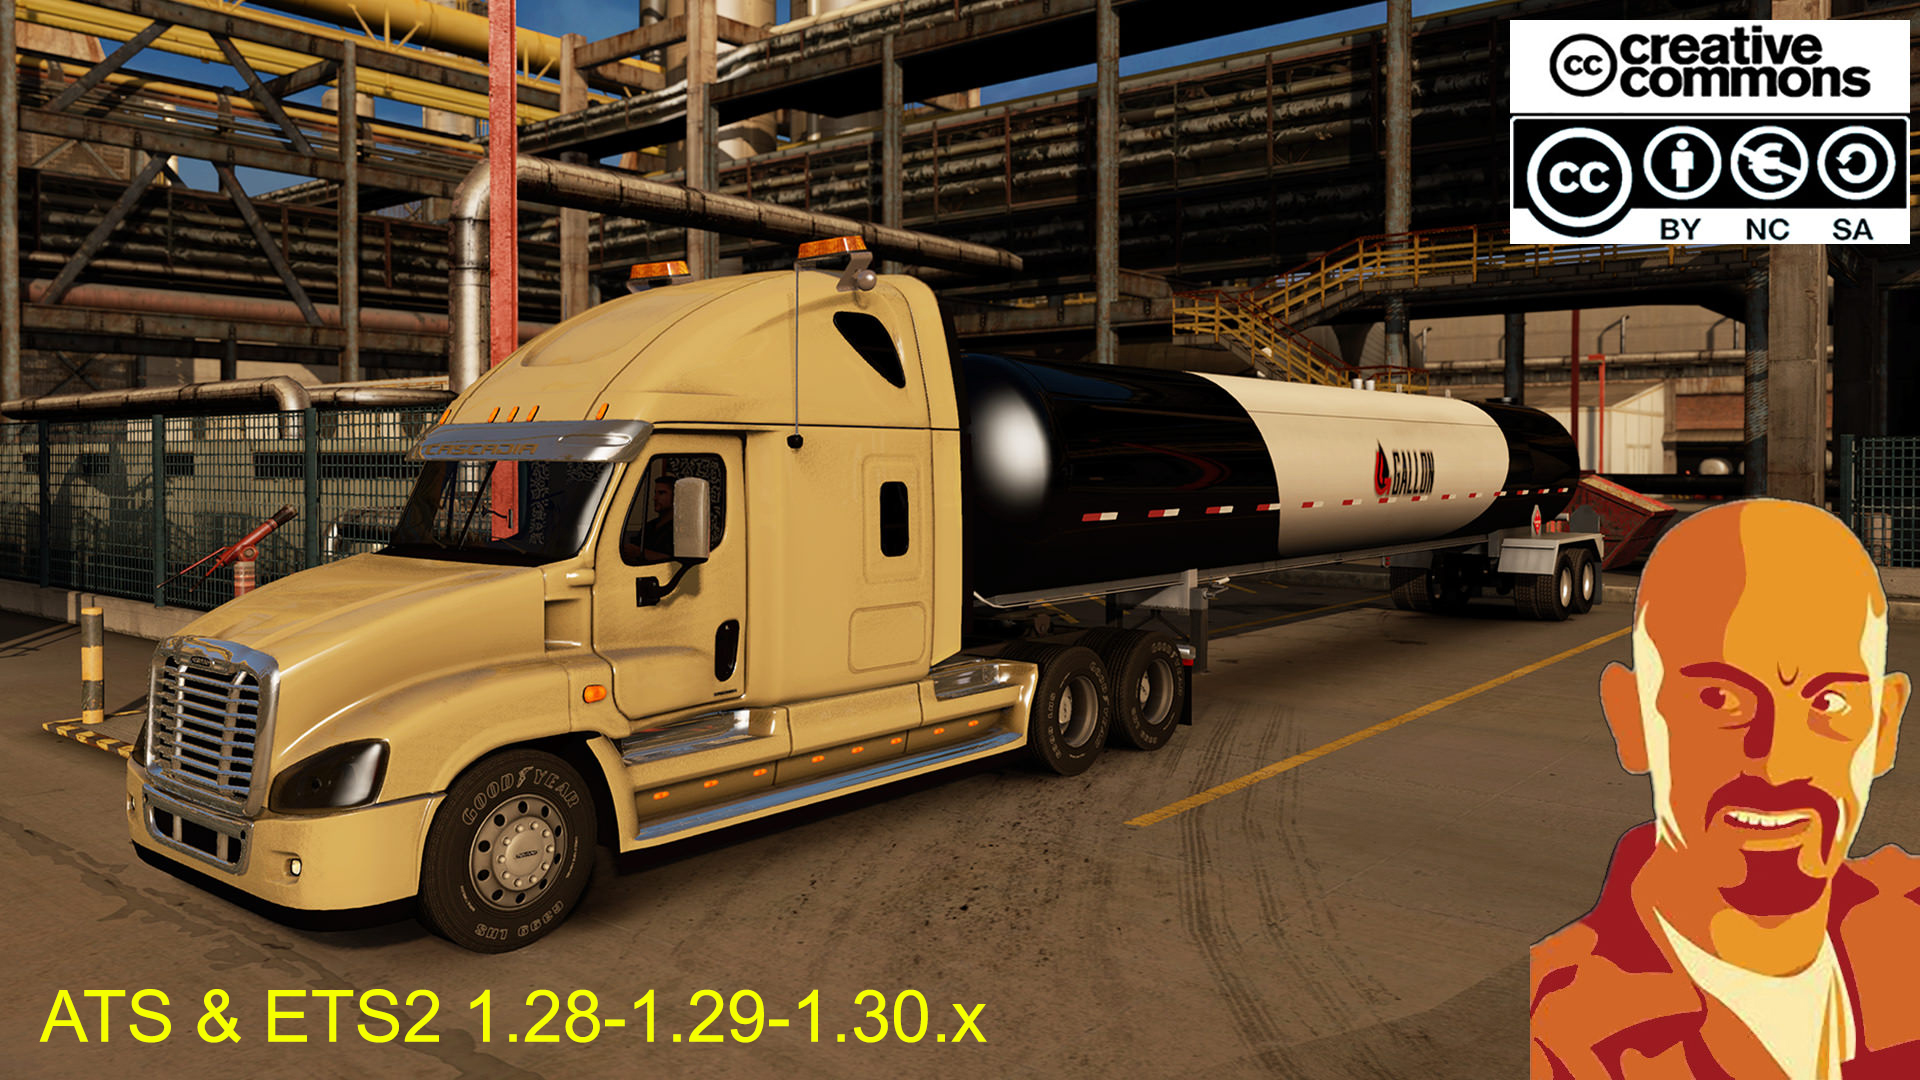 Грузовики для атс 1.49. Freightliner Cascadia ATS. Фредлайнер для етс 2. American Truck Simulator freightliner Cascadia. American Truck Simulator моды freightliner.